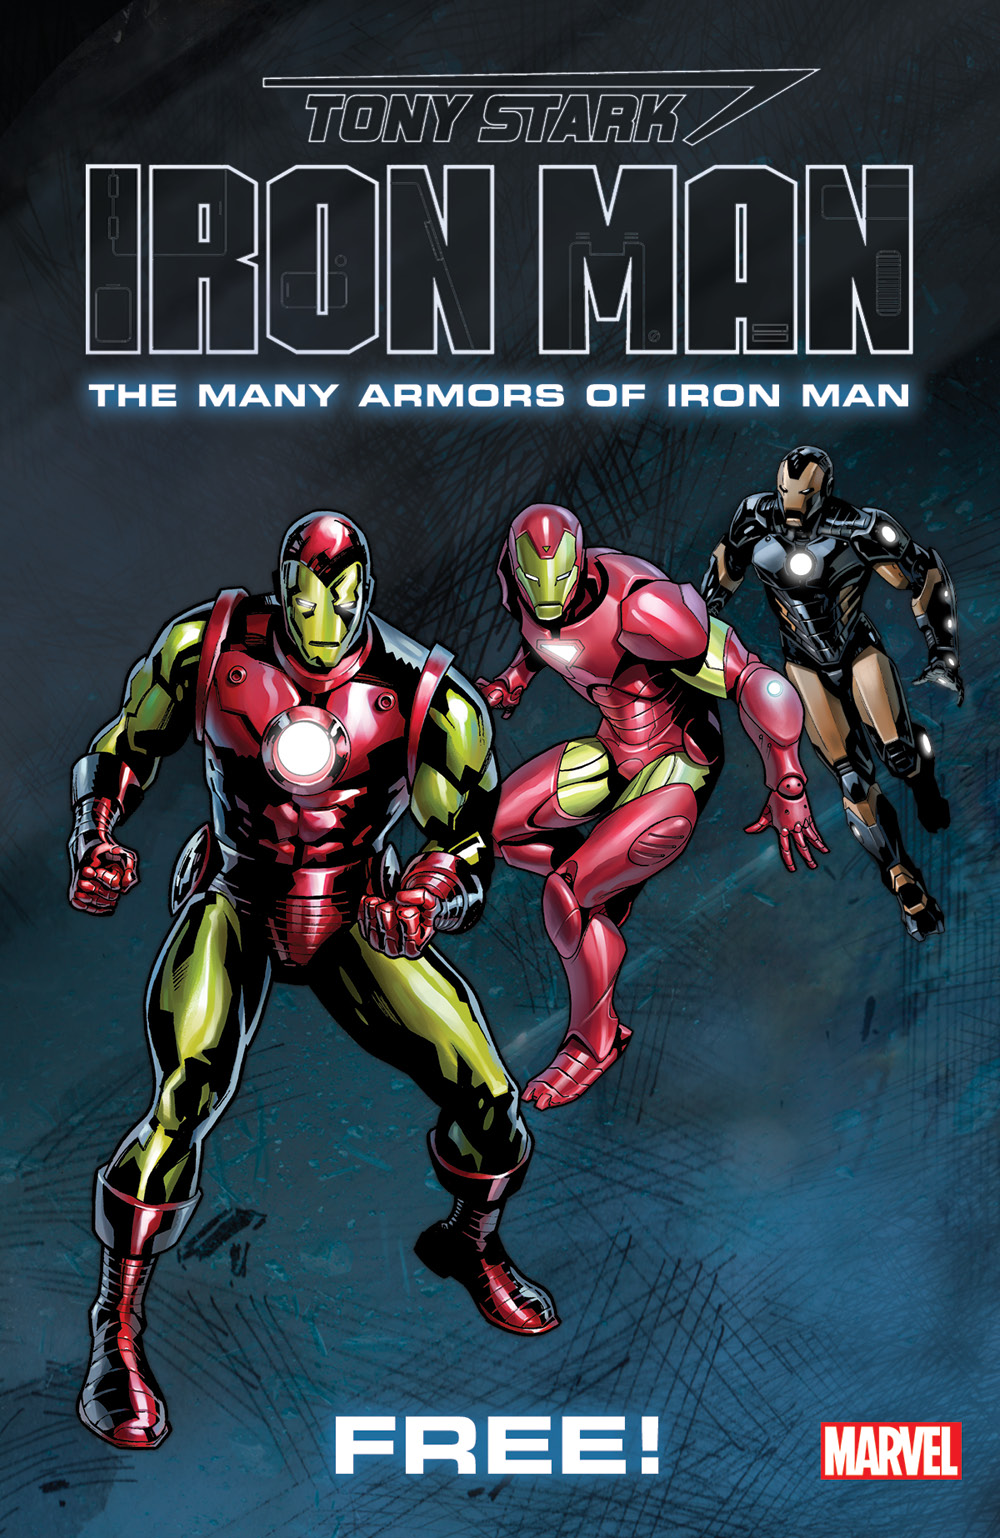 Color de malva Astronave vóleibol Marvel Initiates Tony Stark Iron Man Launch Parties - Free Comic Book Day